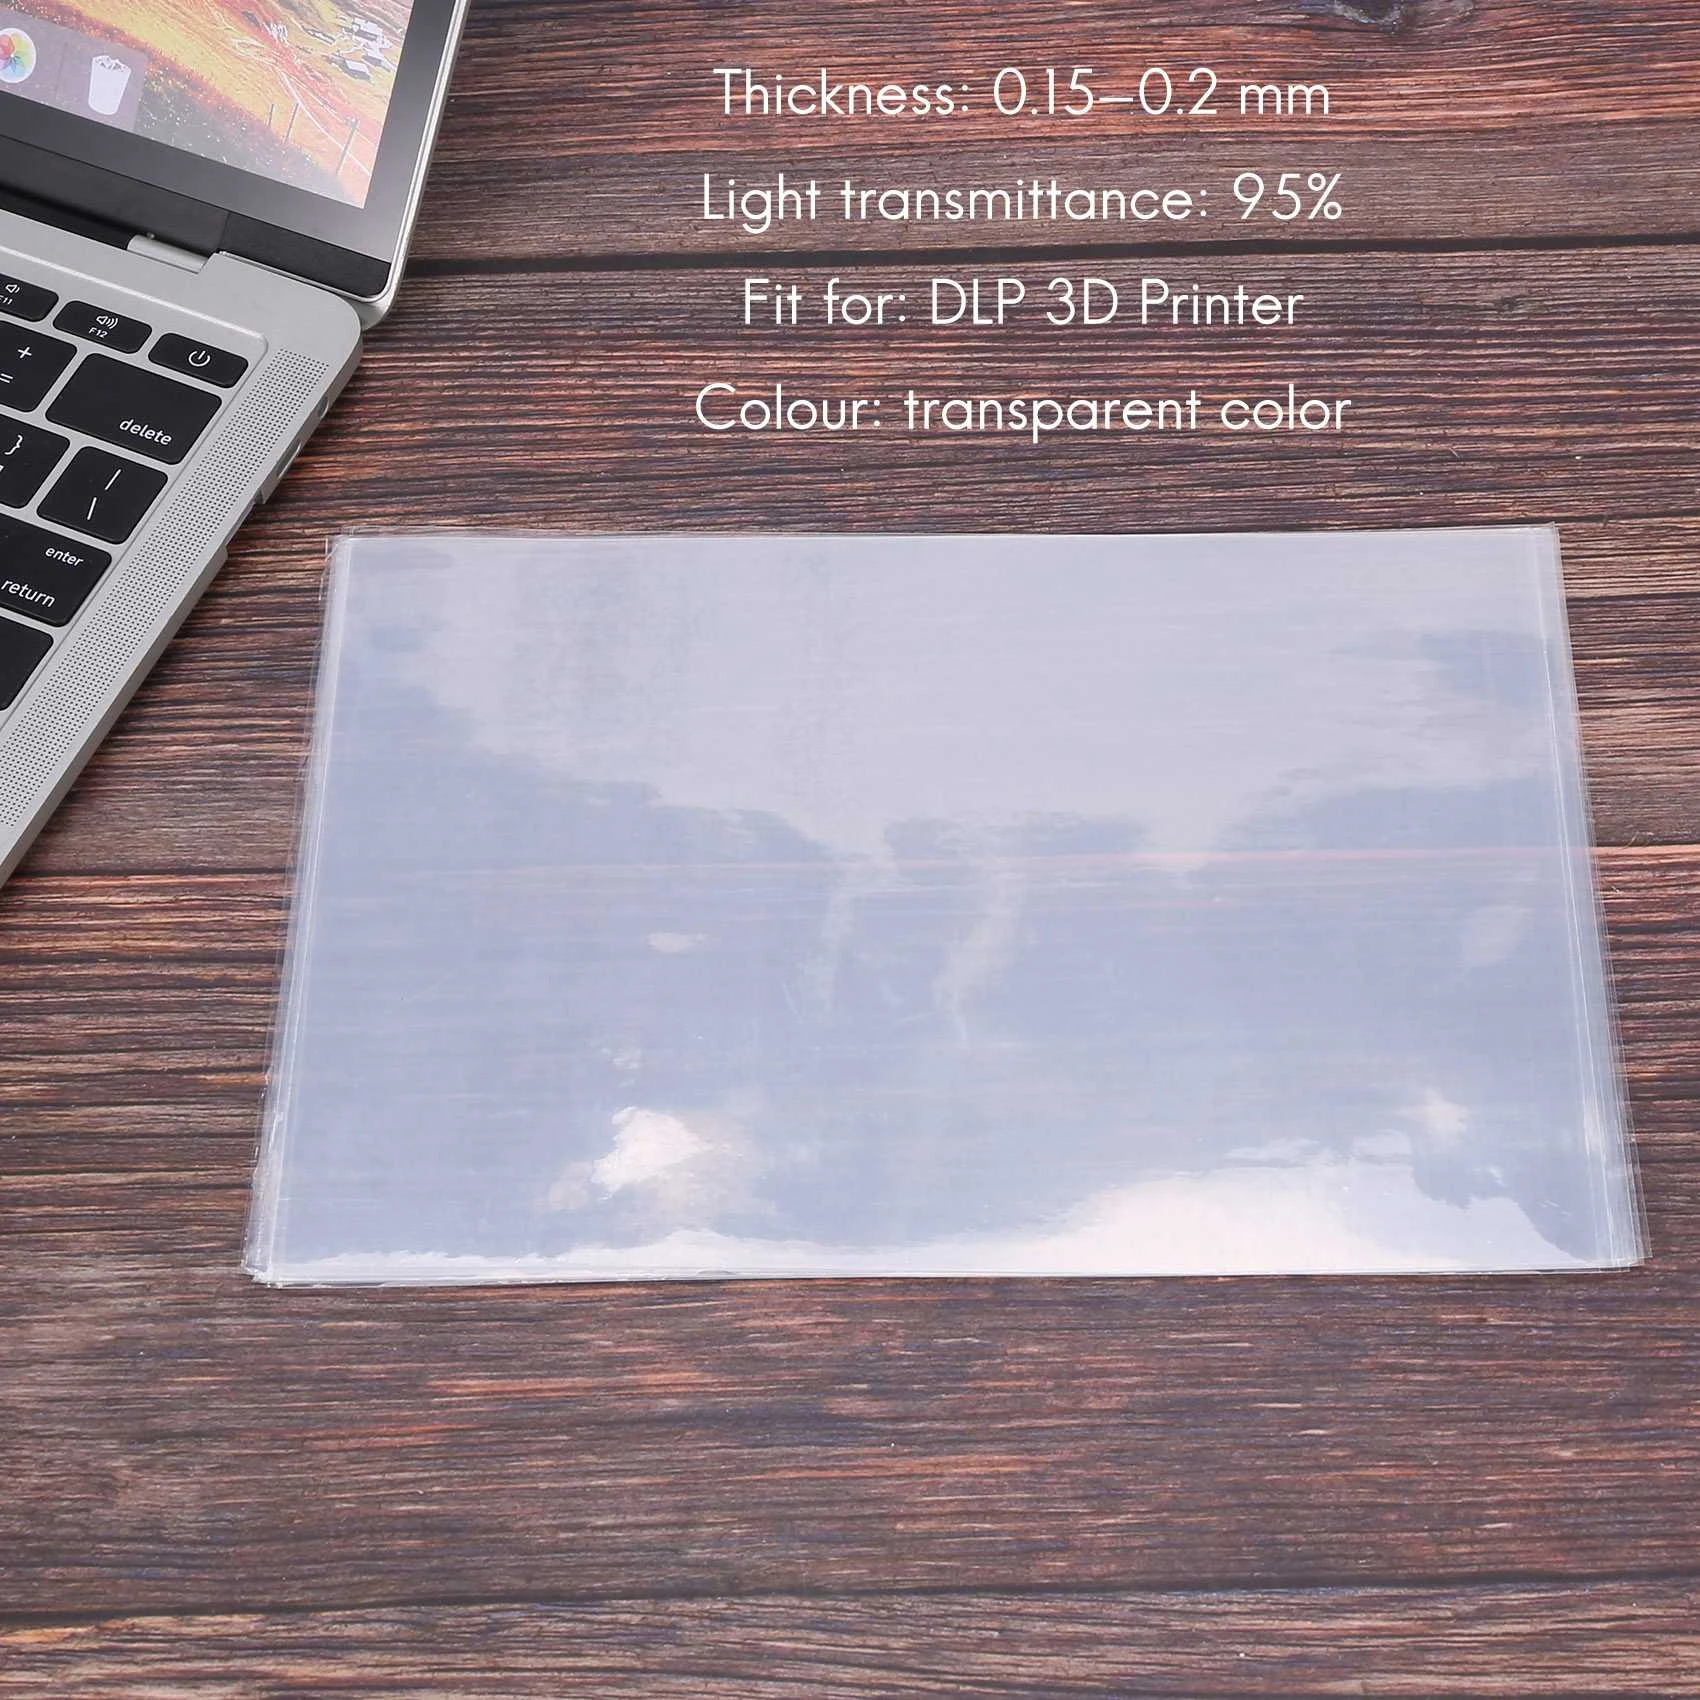 8PCS 140x200mm SLA/LCD FEP Film 0.15-0.2mm Thickness for Photon Resin DLP 3D Printer